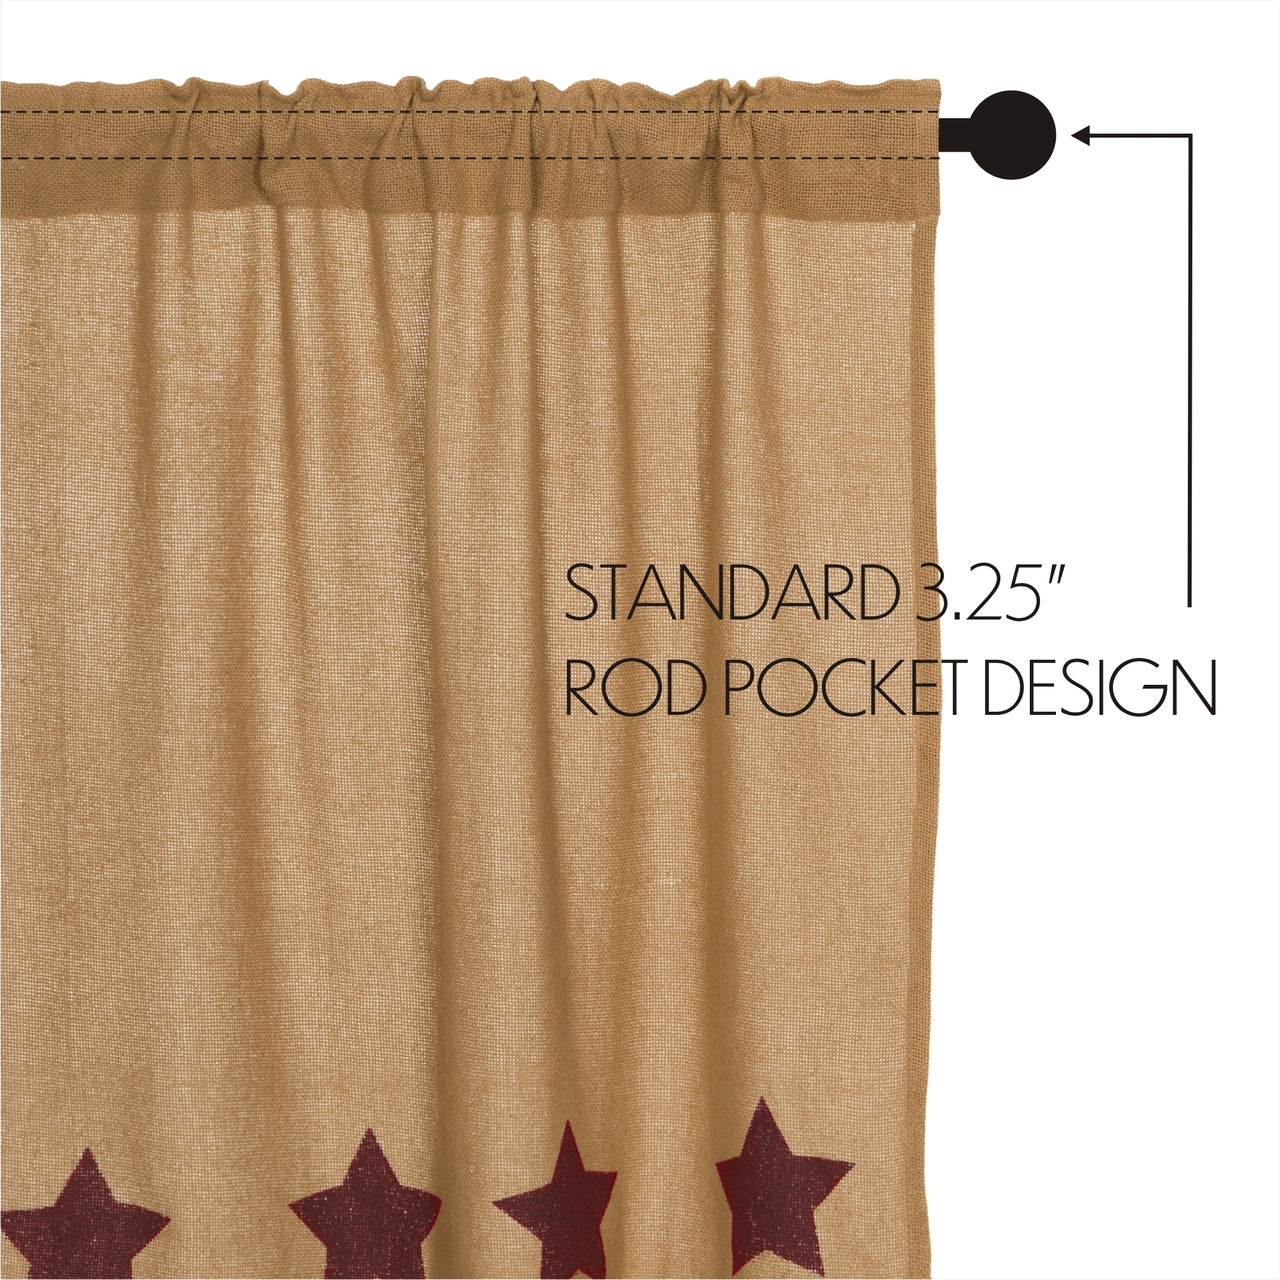 Burlap w/Burgundy Stencil Stars Prairie Swag Curtain Set of 2 36x36x18 VHC Brands